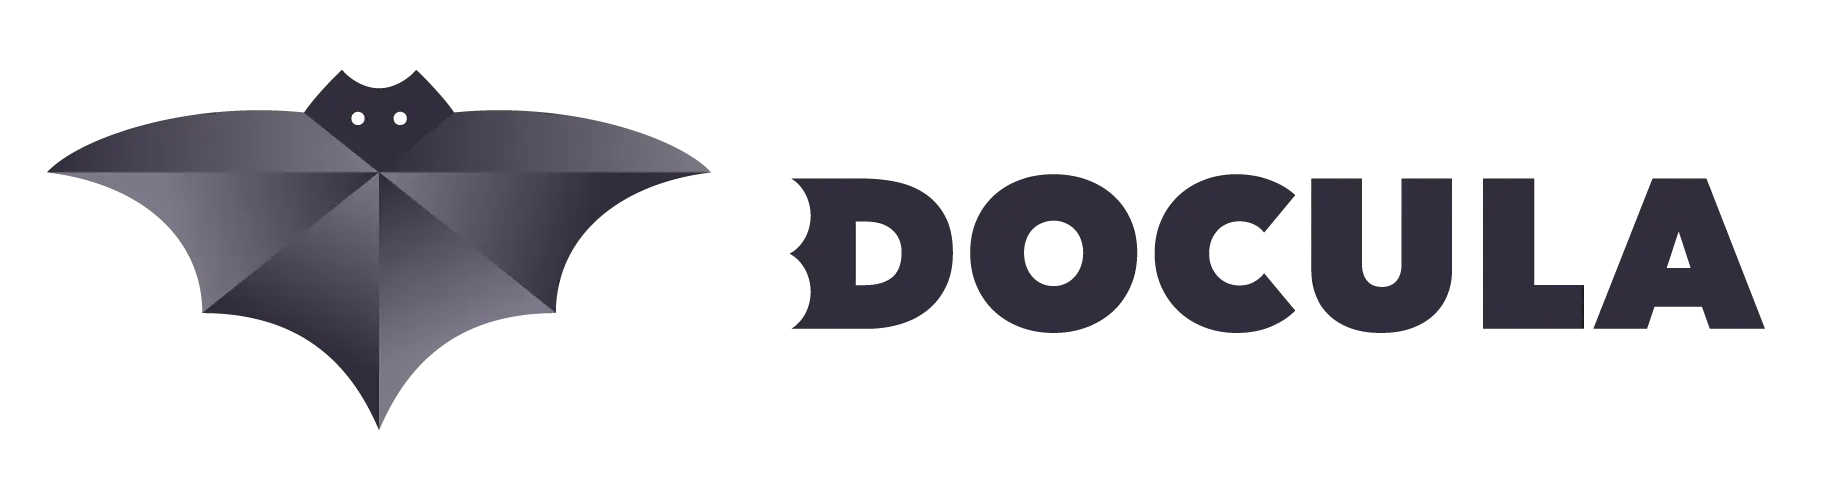 Docula logo